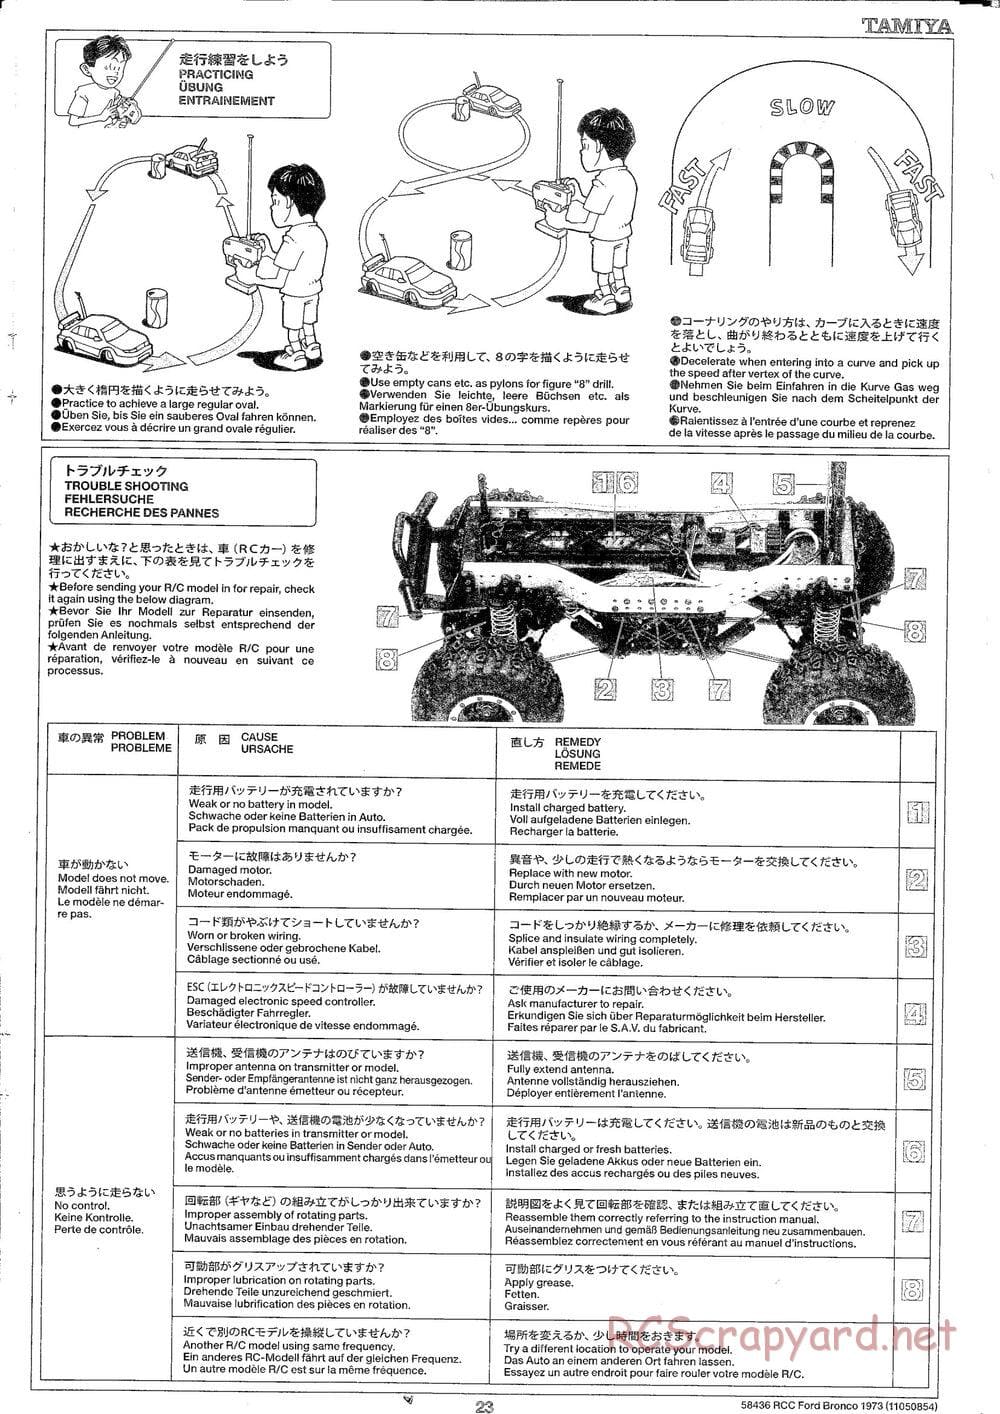 Tamiya - Ford Bronco 1973 - CR-01 Chassis - Manual - Page 23